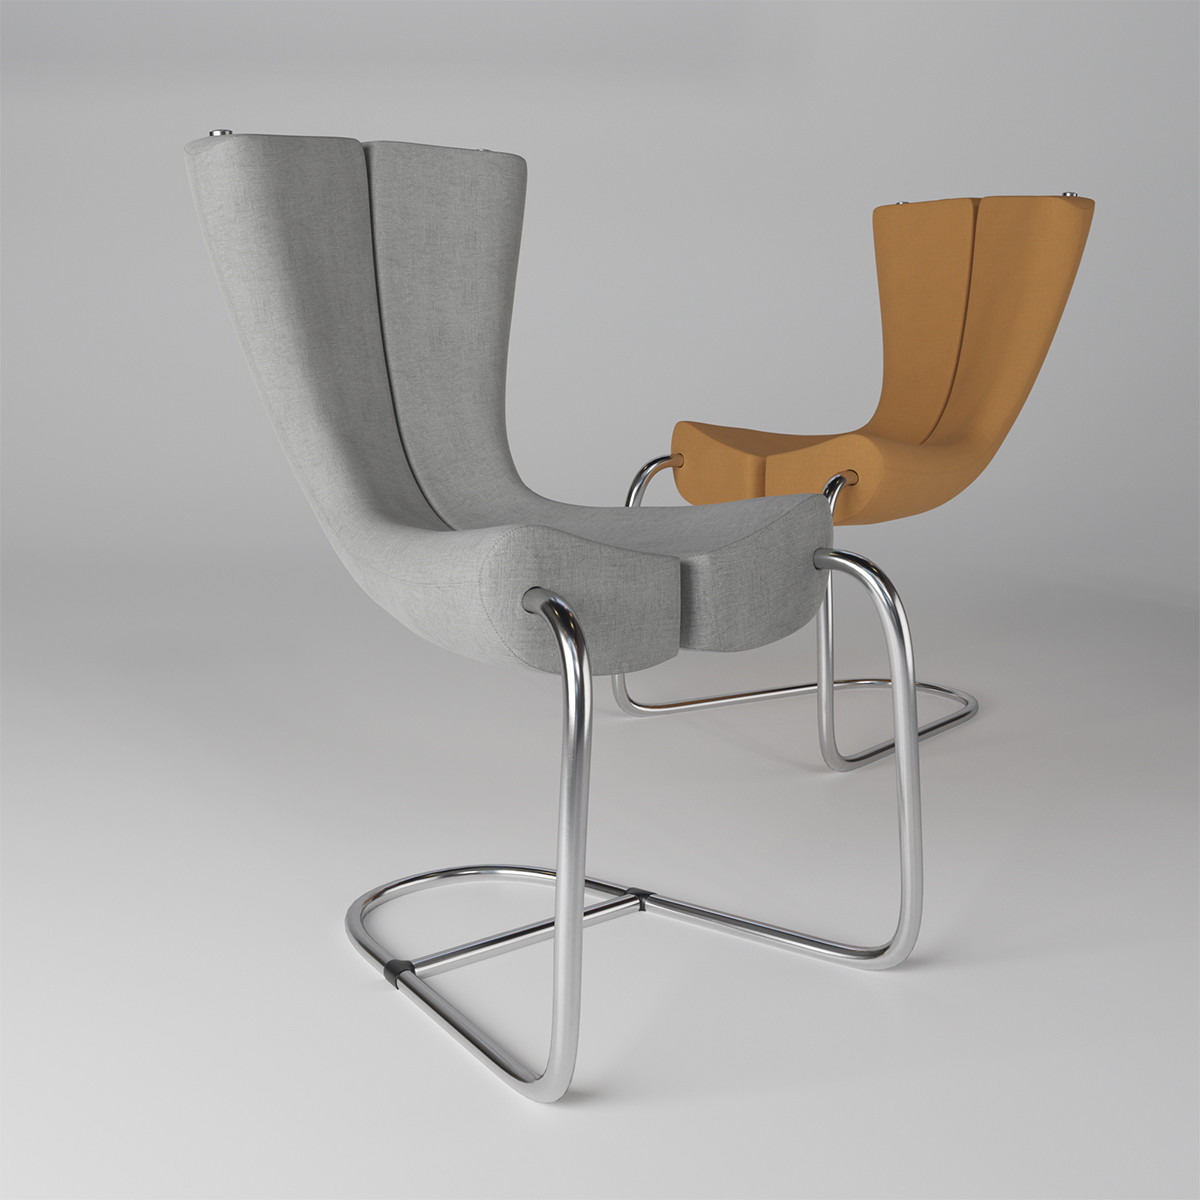 Roman Shipulin - Komed Chair By Marc Newson 3D model